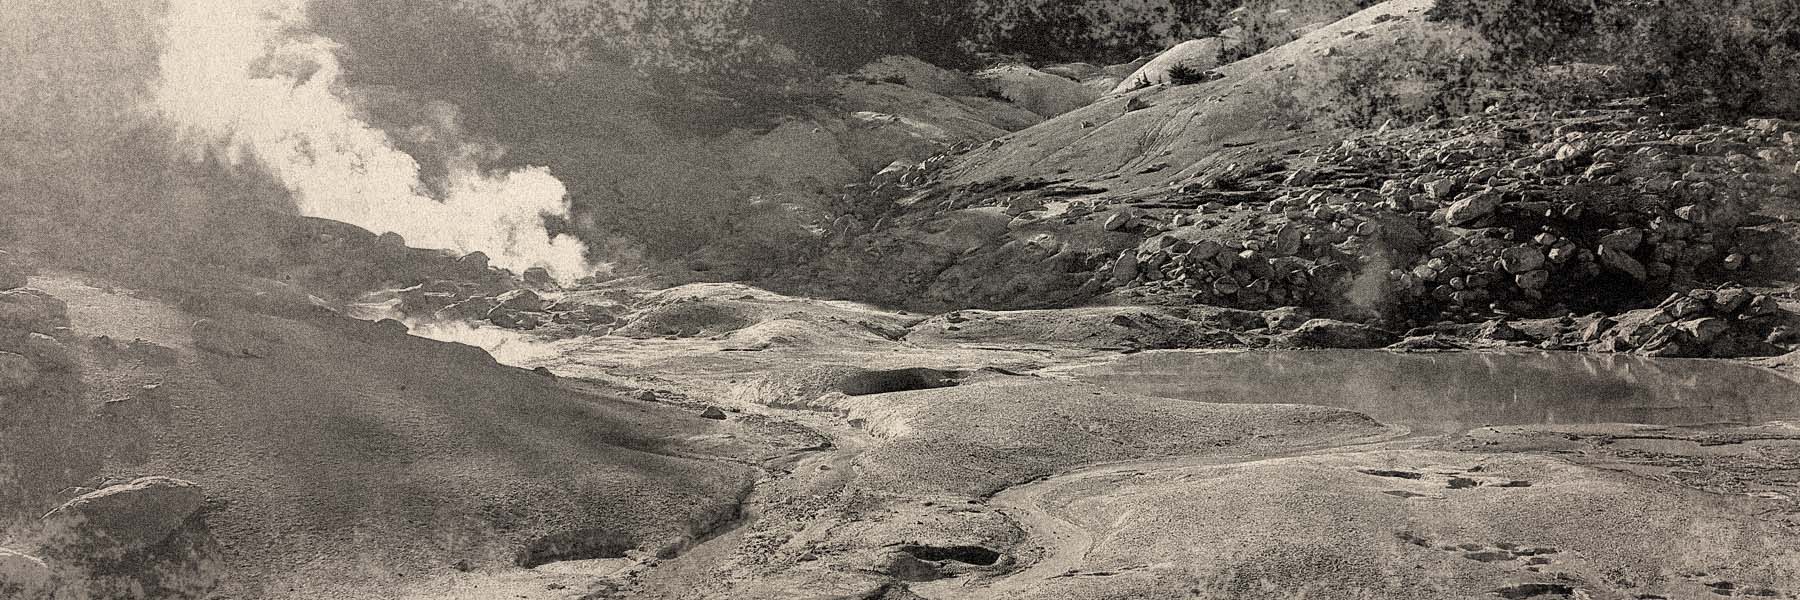 Historic photo of Lassen Volcanic National Park